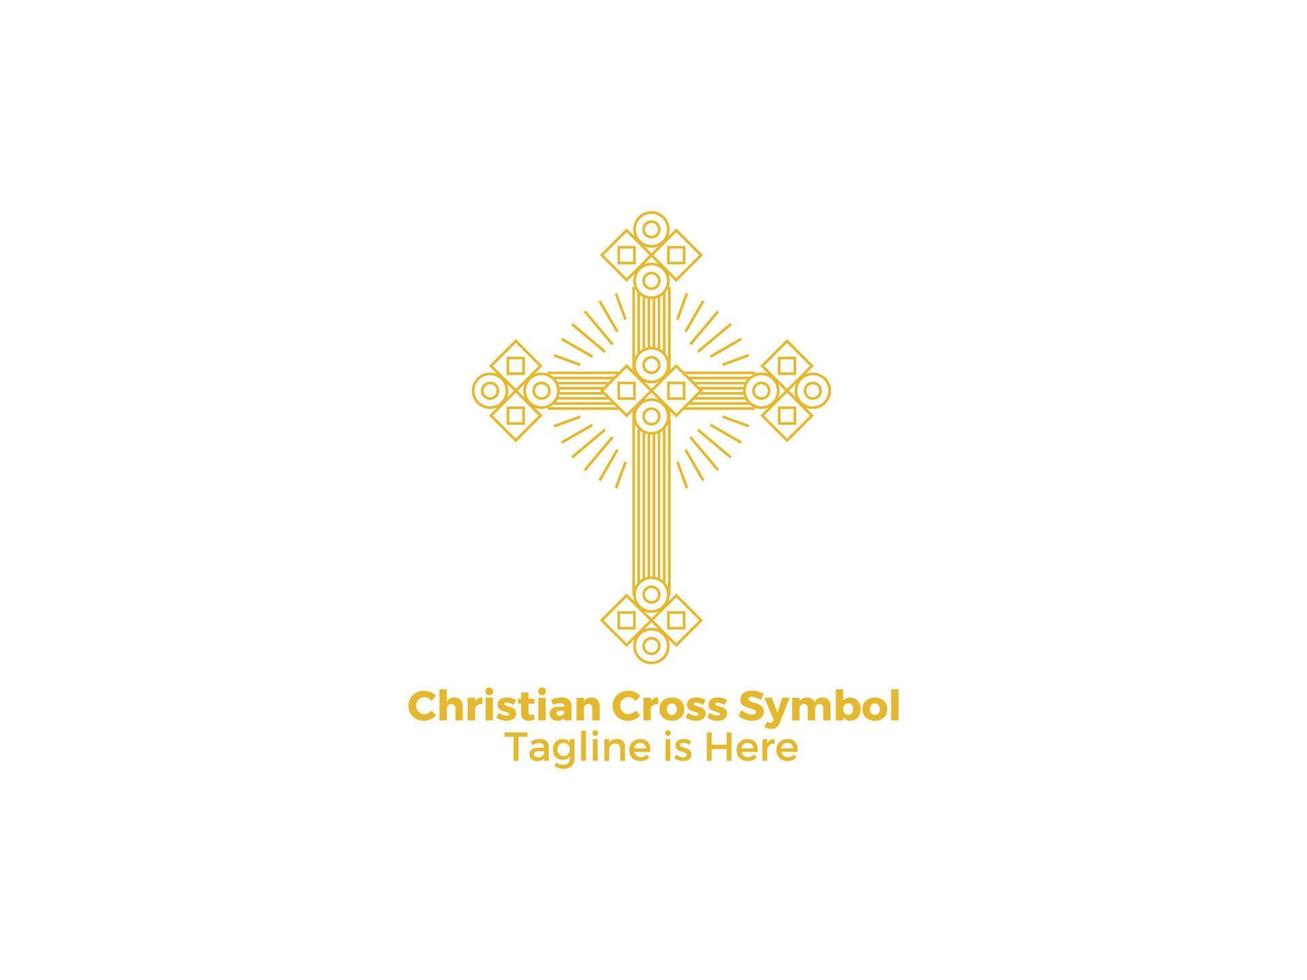 Cross symbols christians catholicism religion peace jesus free vector